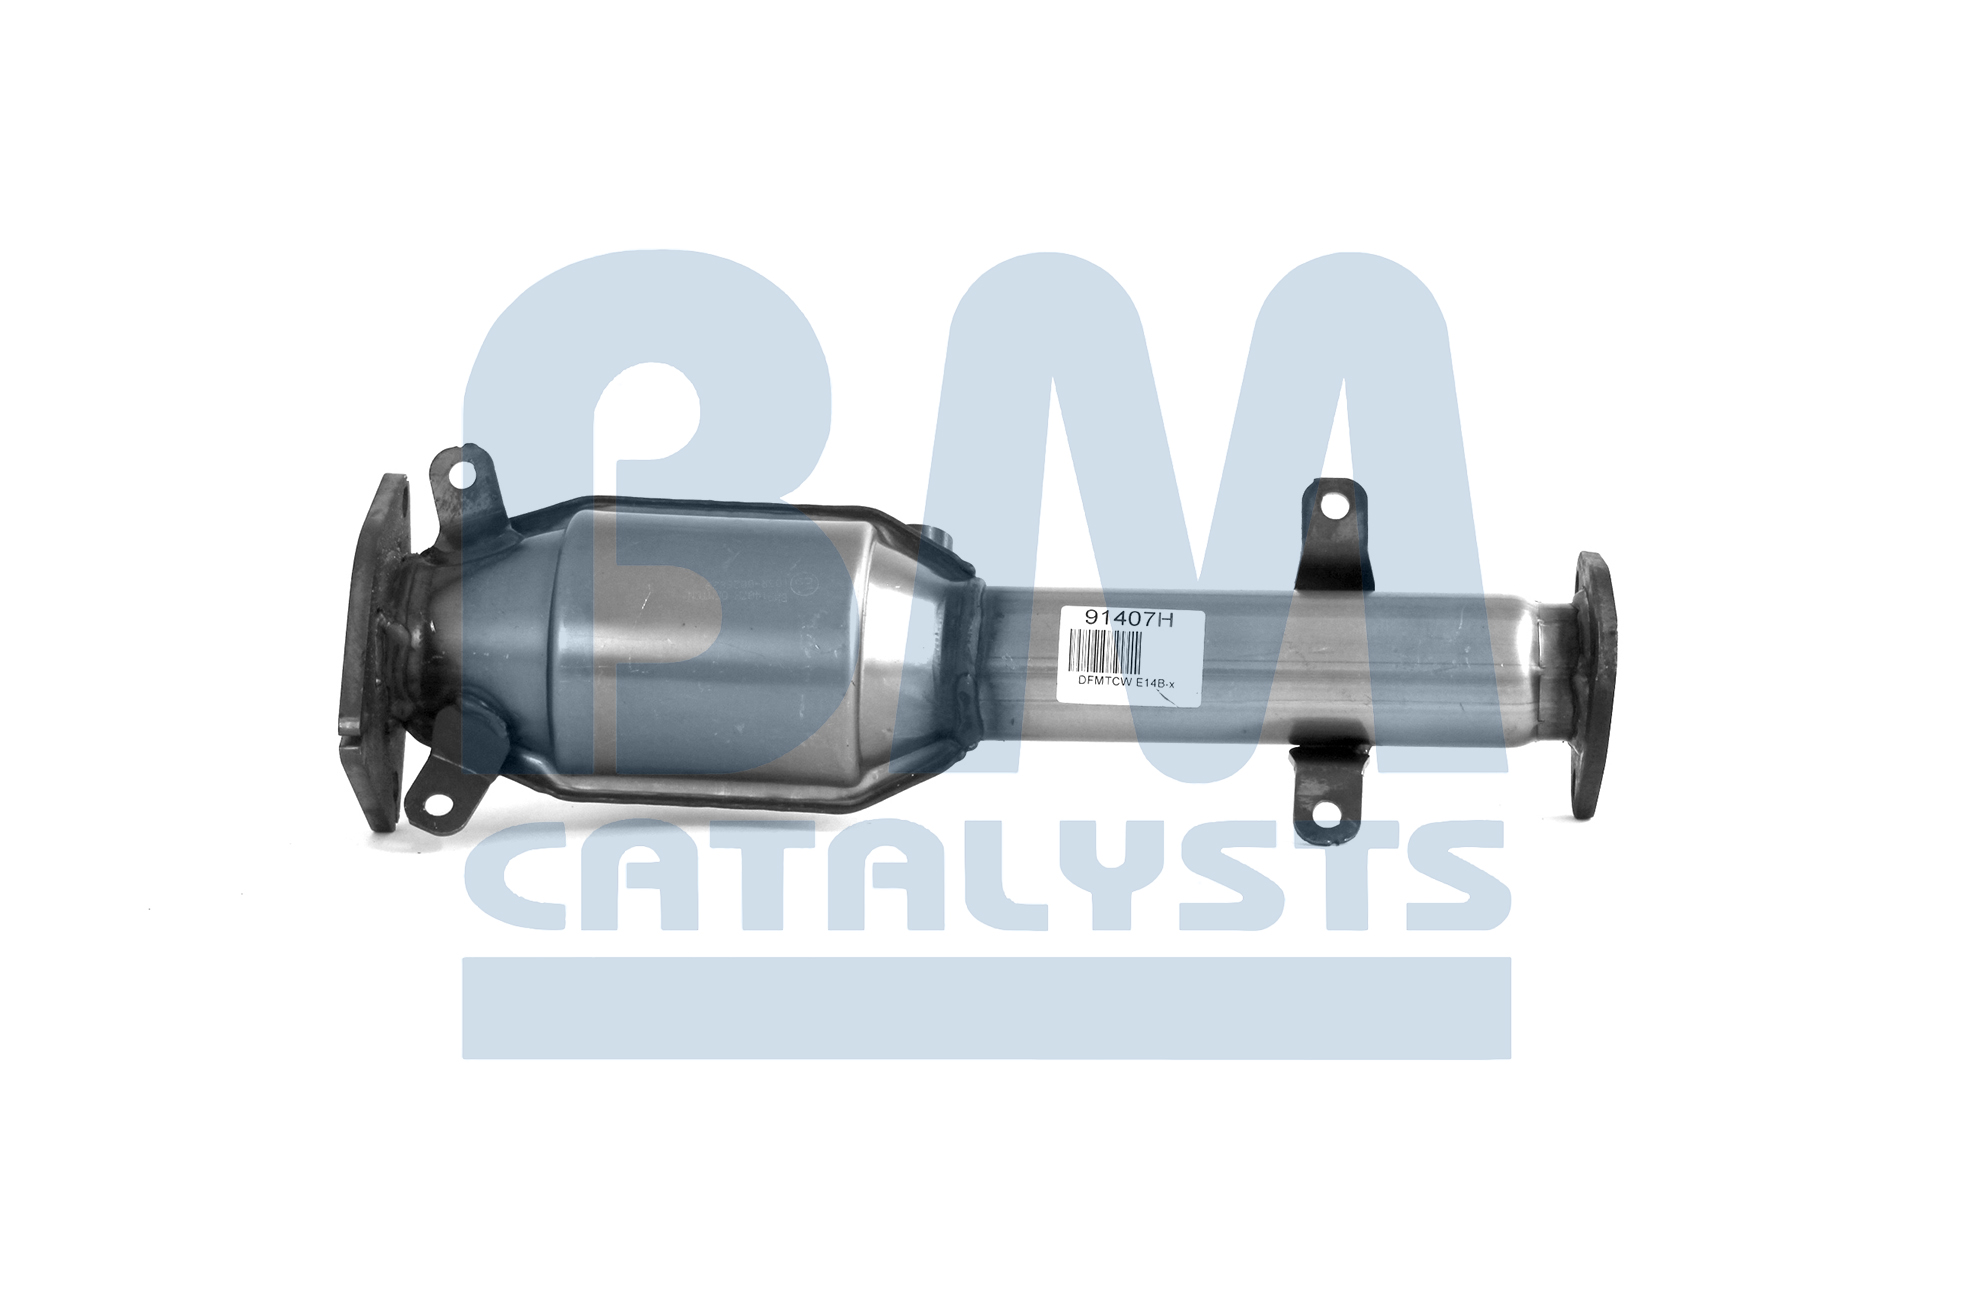 BM CATALYSTS BM91407H Catalytic converter Euro 4, E57-103R, Approved